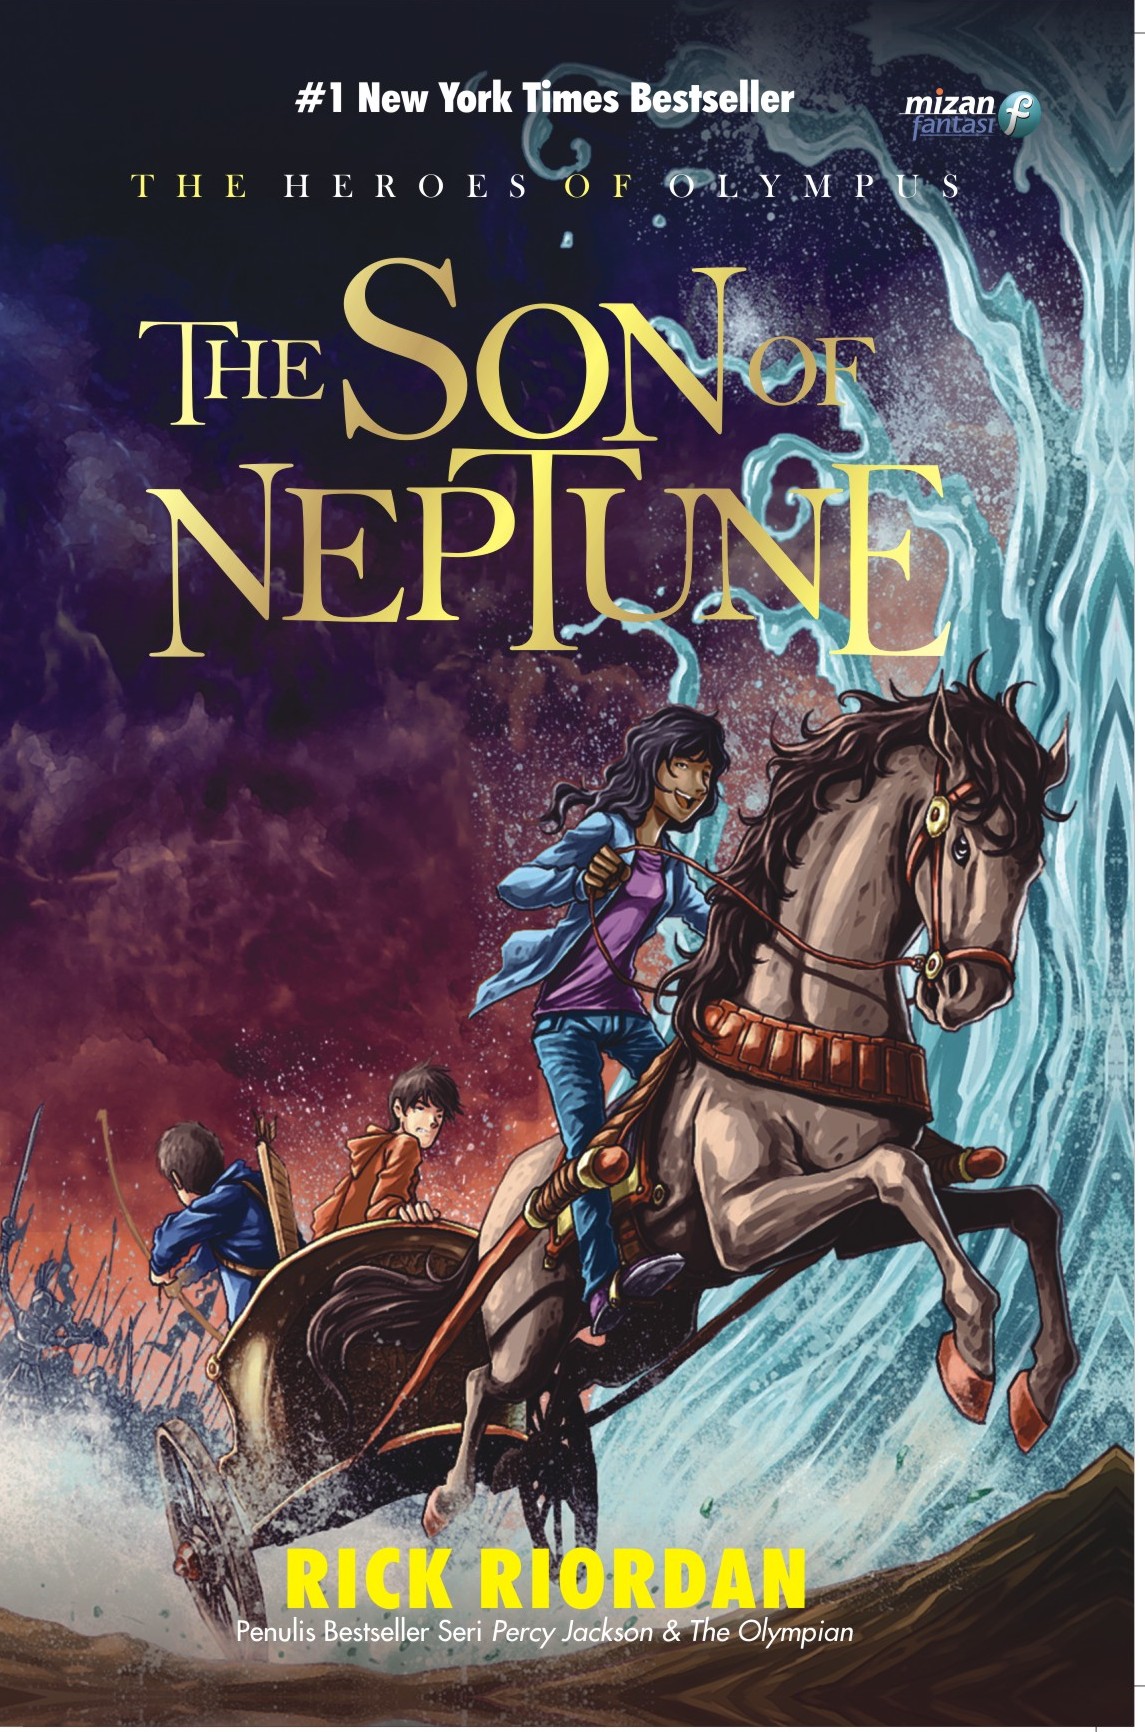 the son of neptune audio book